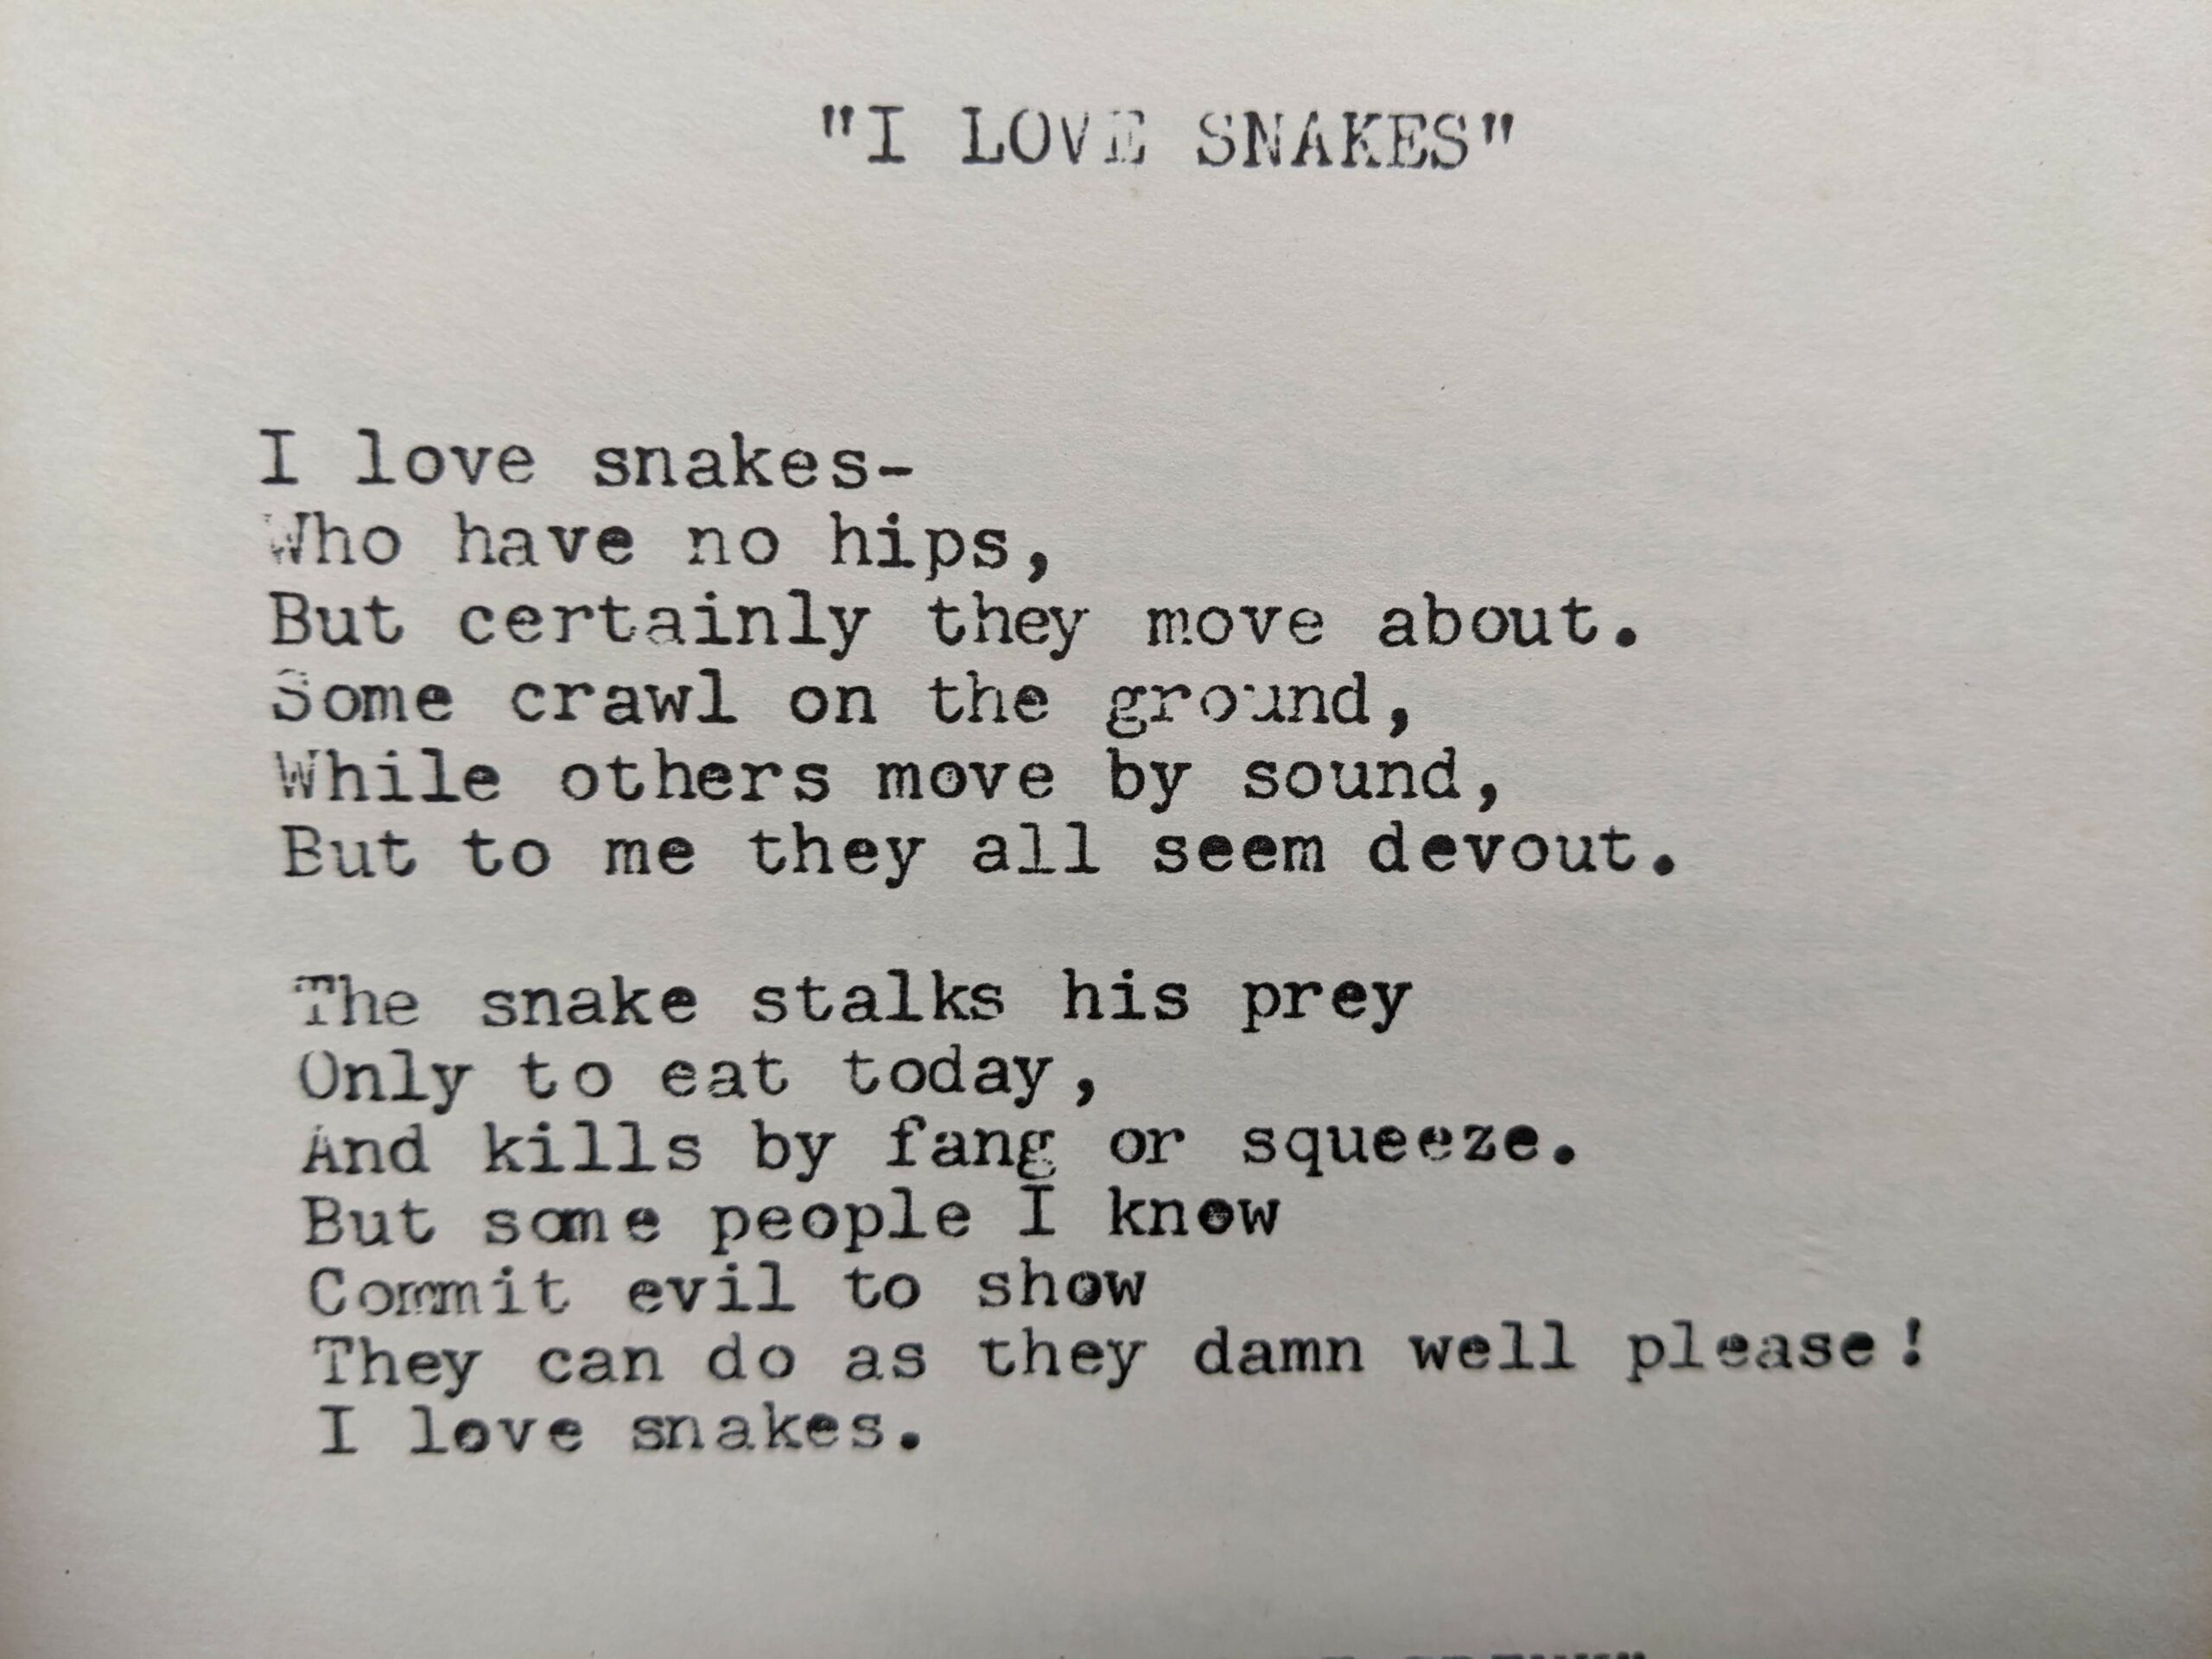 Typewritten poem in black on white background "I LOVE SNAKES"